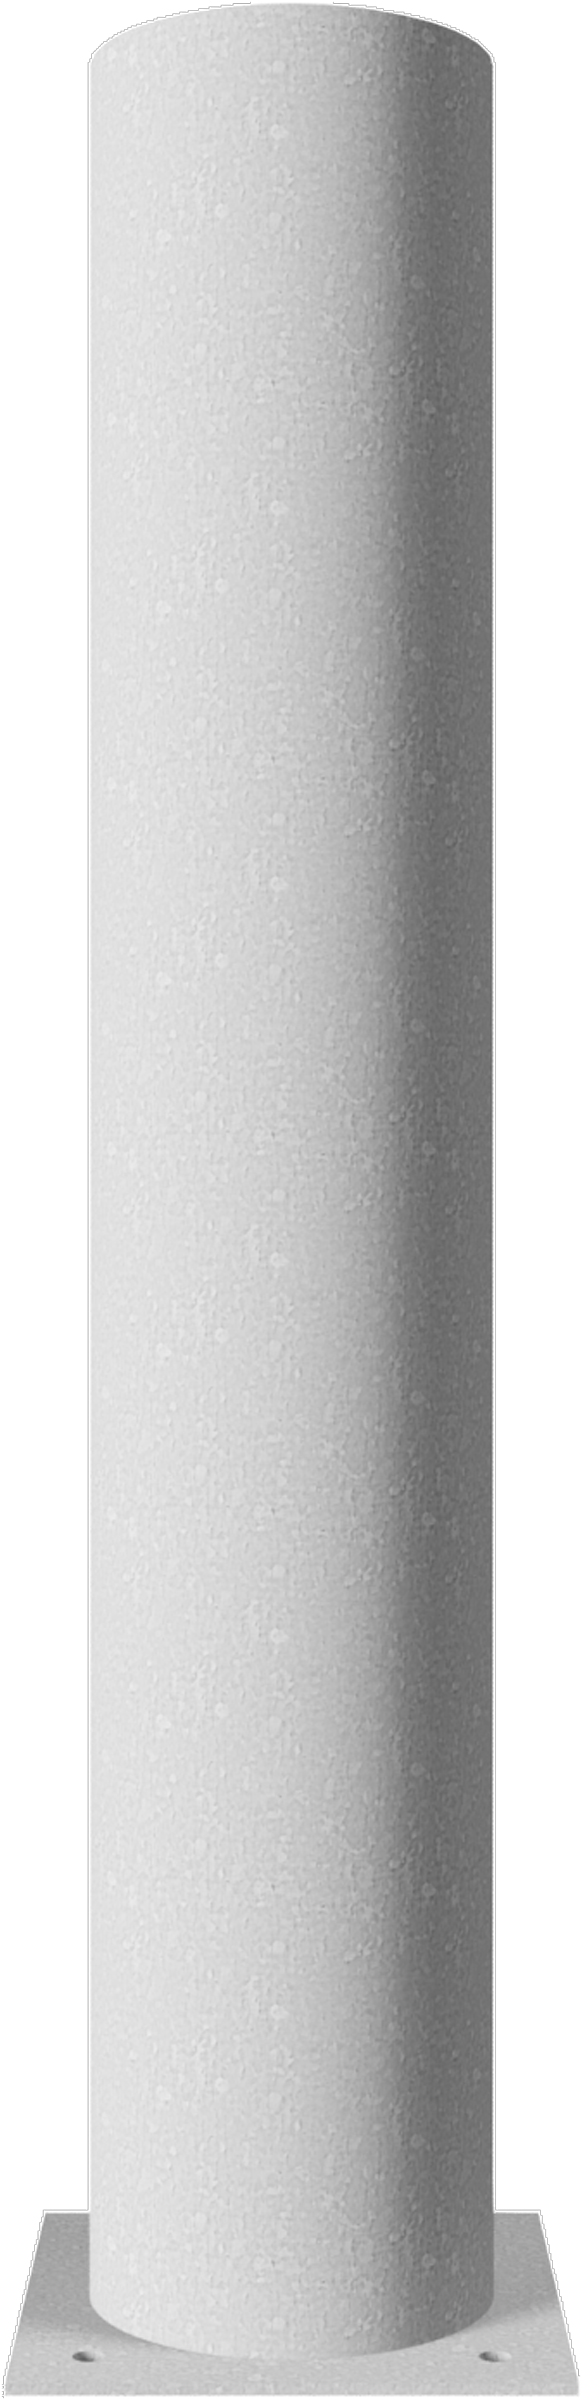 Schake Stahlrohrpoller OD Ø 273 mm verzinkt - 1,50 m